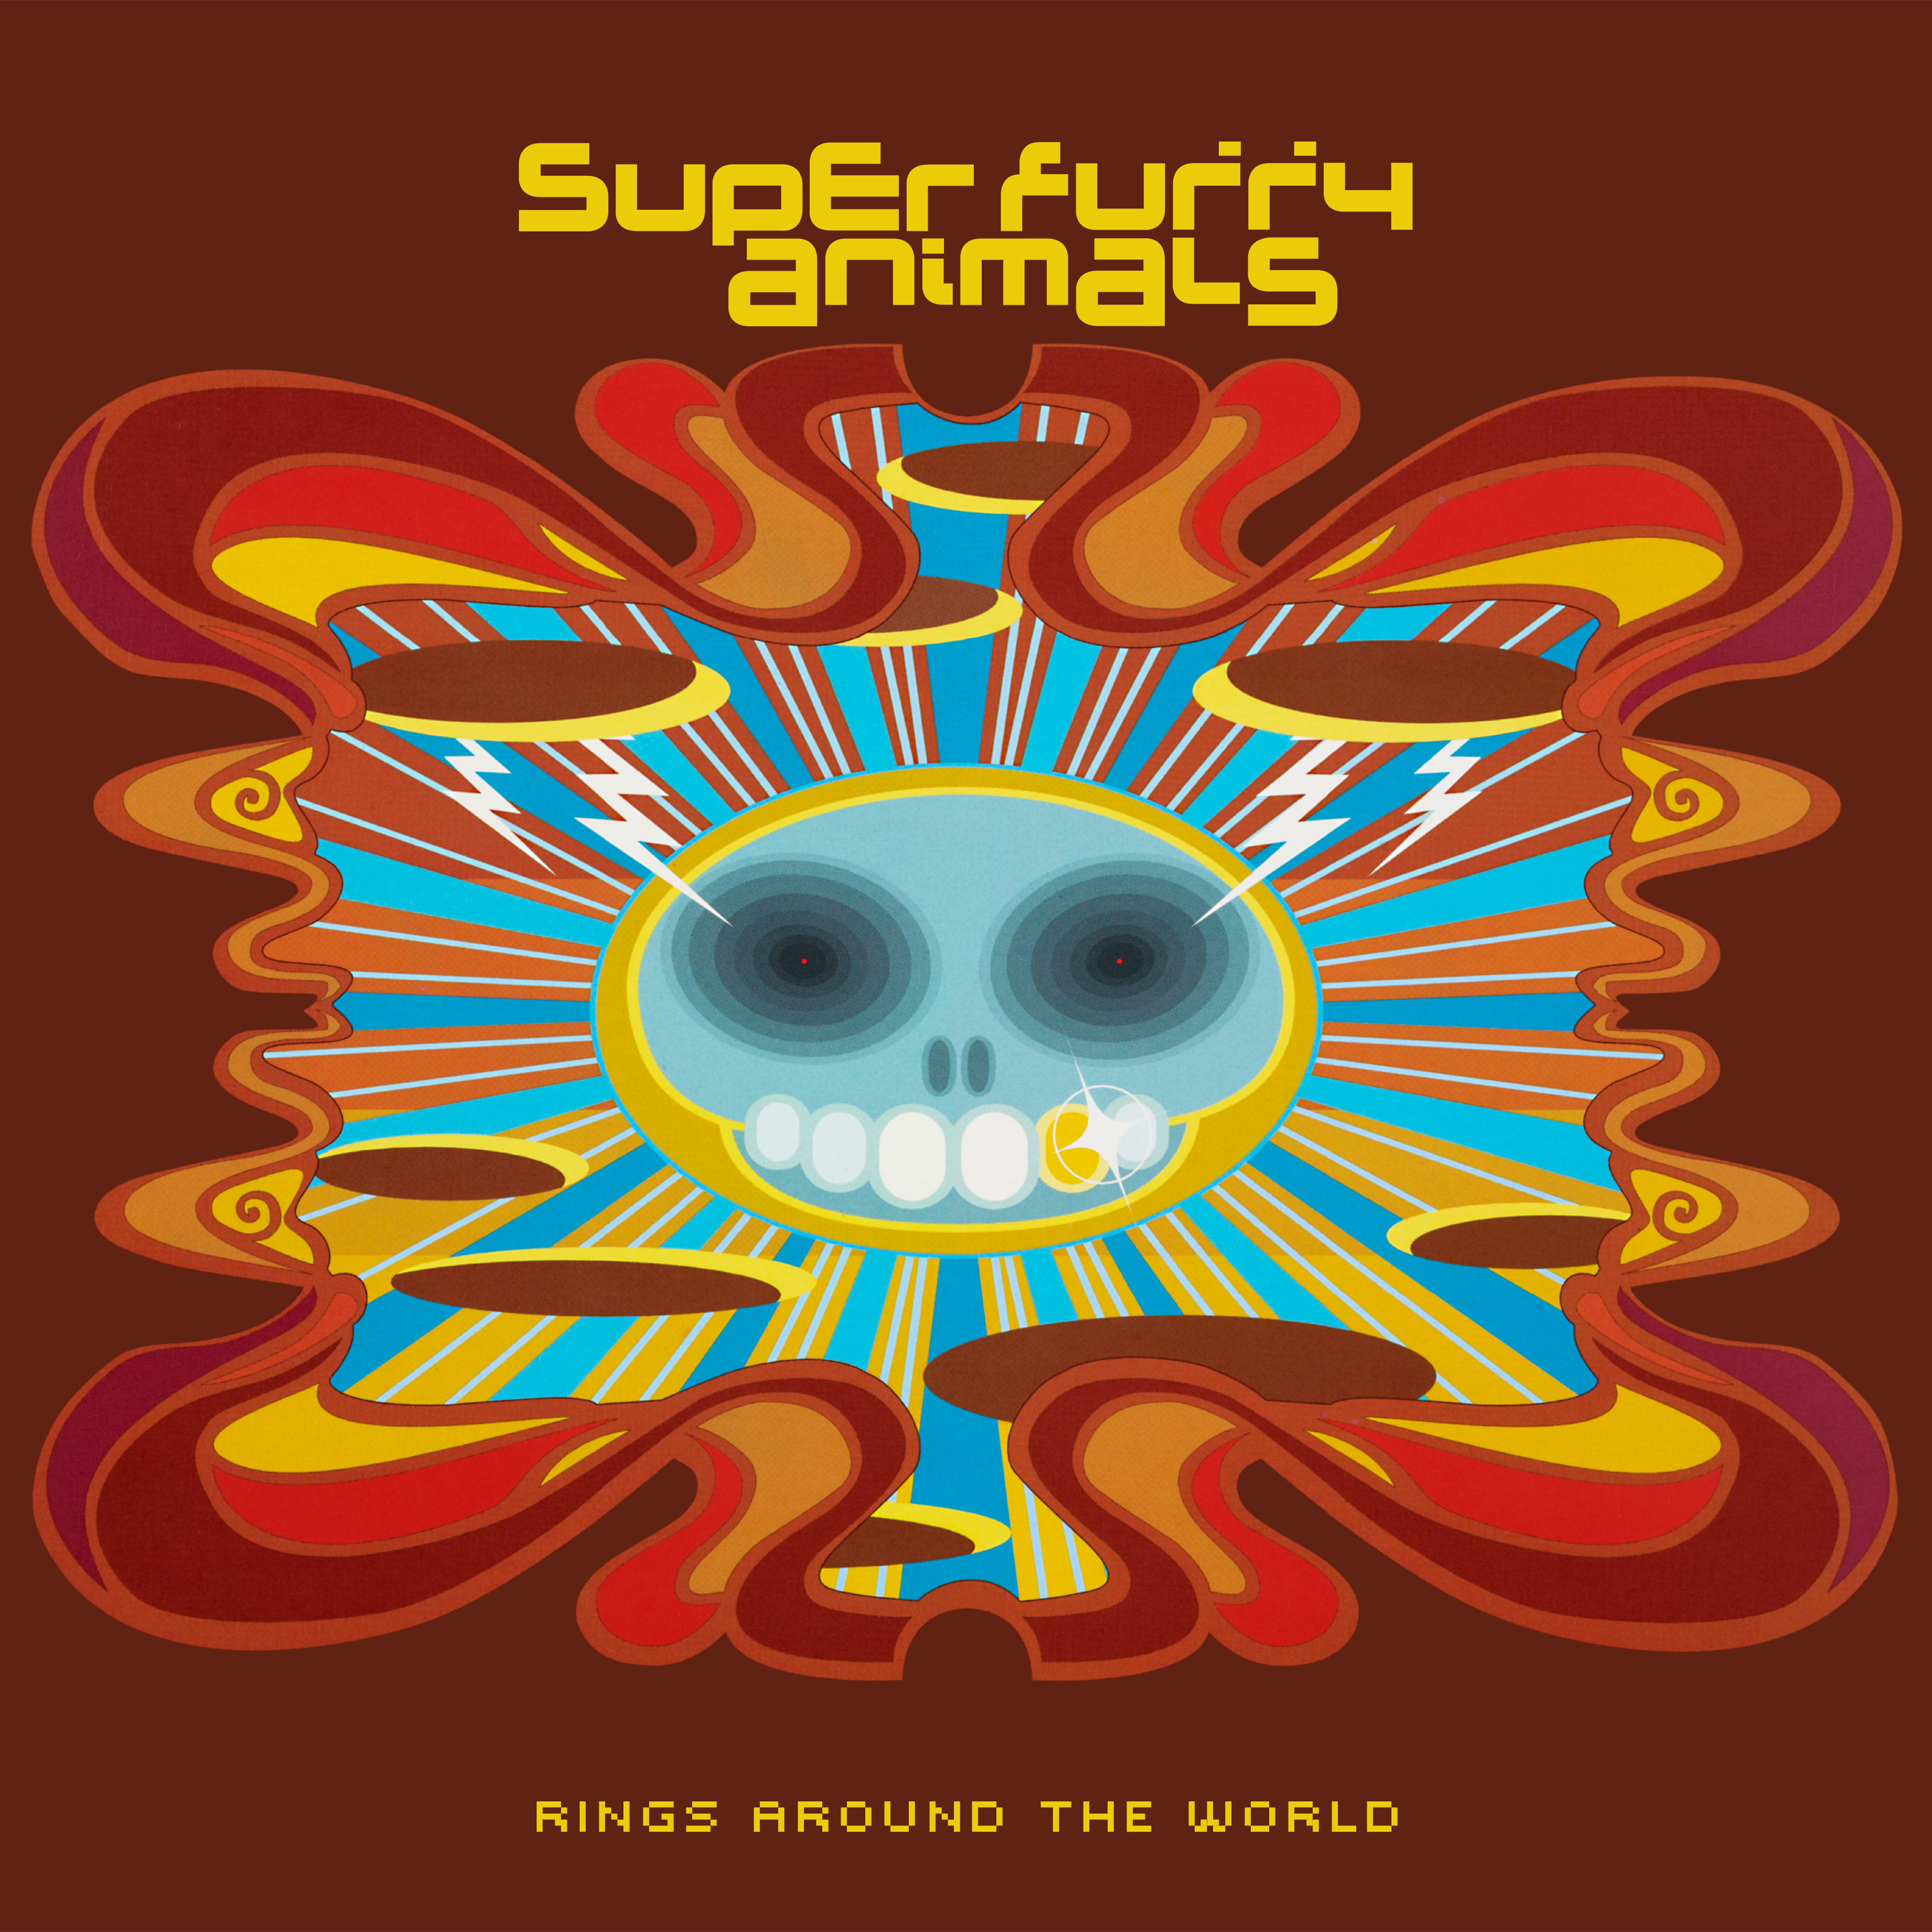 Super Furry Animals – Rings Around the World (20th Anniversary Edition Remastered) (2001/2021) [FLAC 24bit/96kHz]